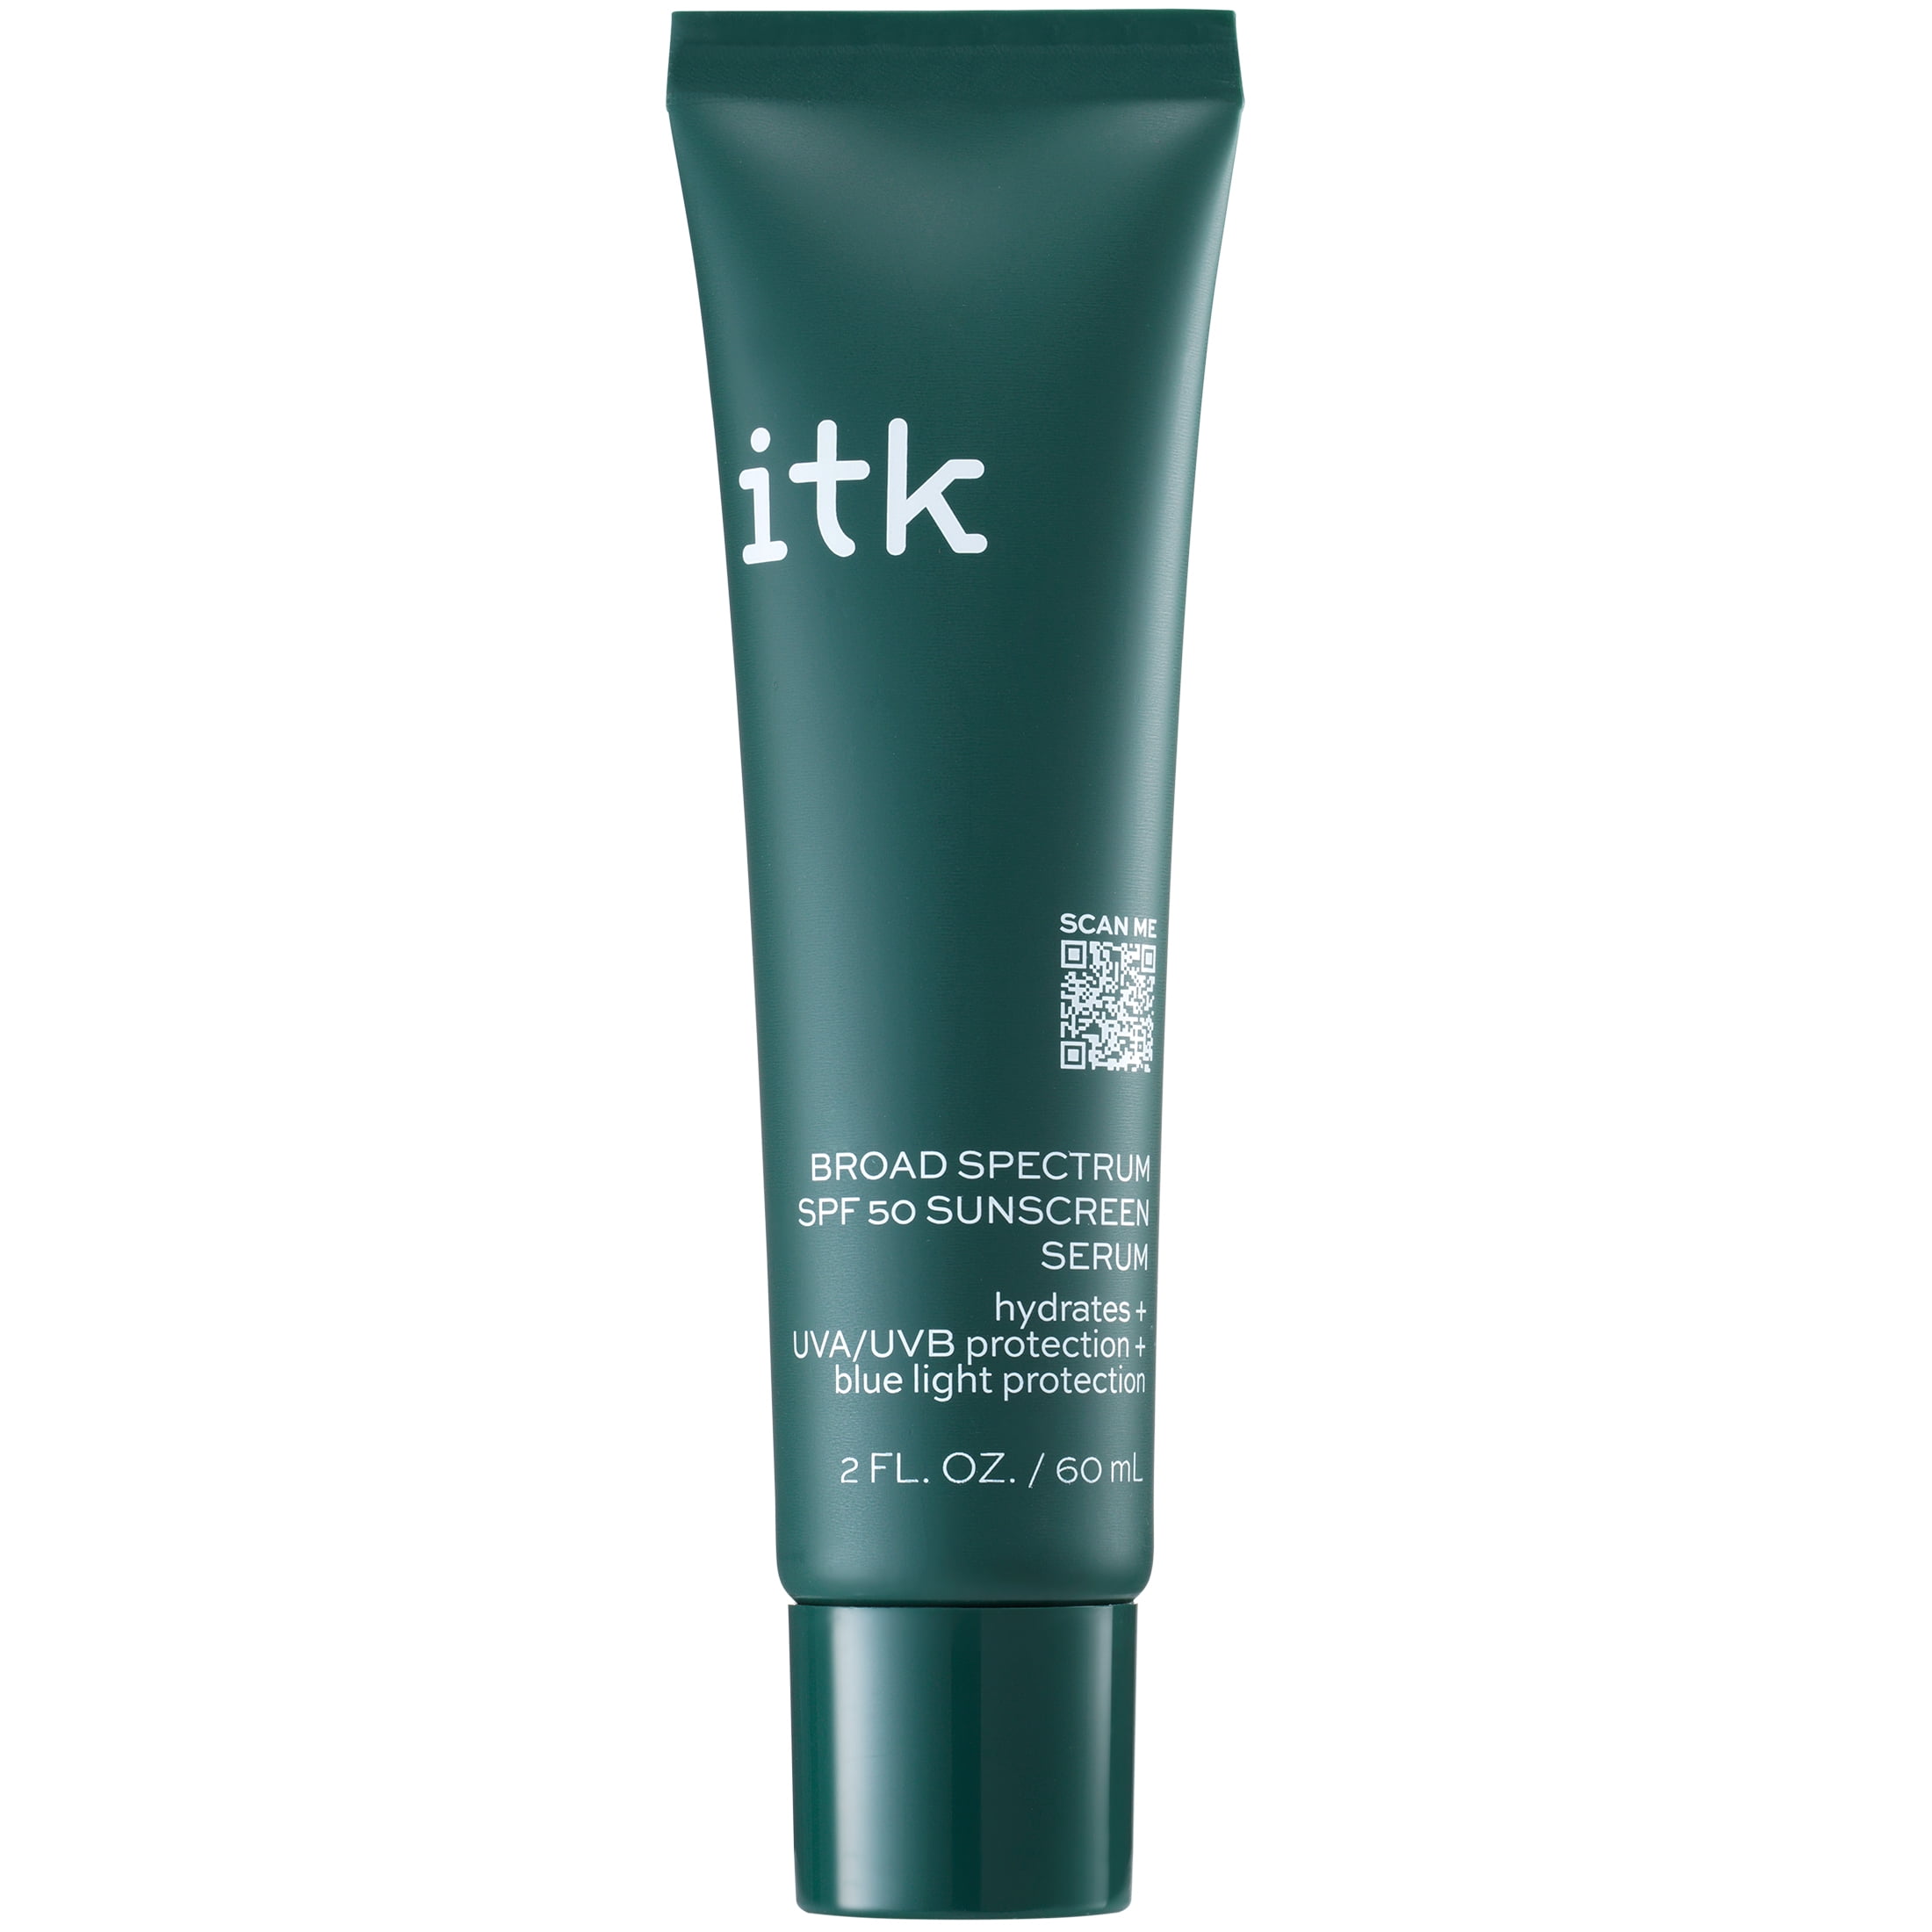 ITK Broad Spectrum SPF 50 Sunscreen Serum with Vitamin E + Zinc Oxide, 2 oz